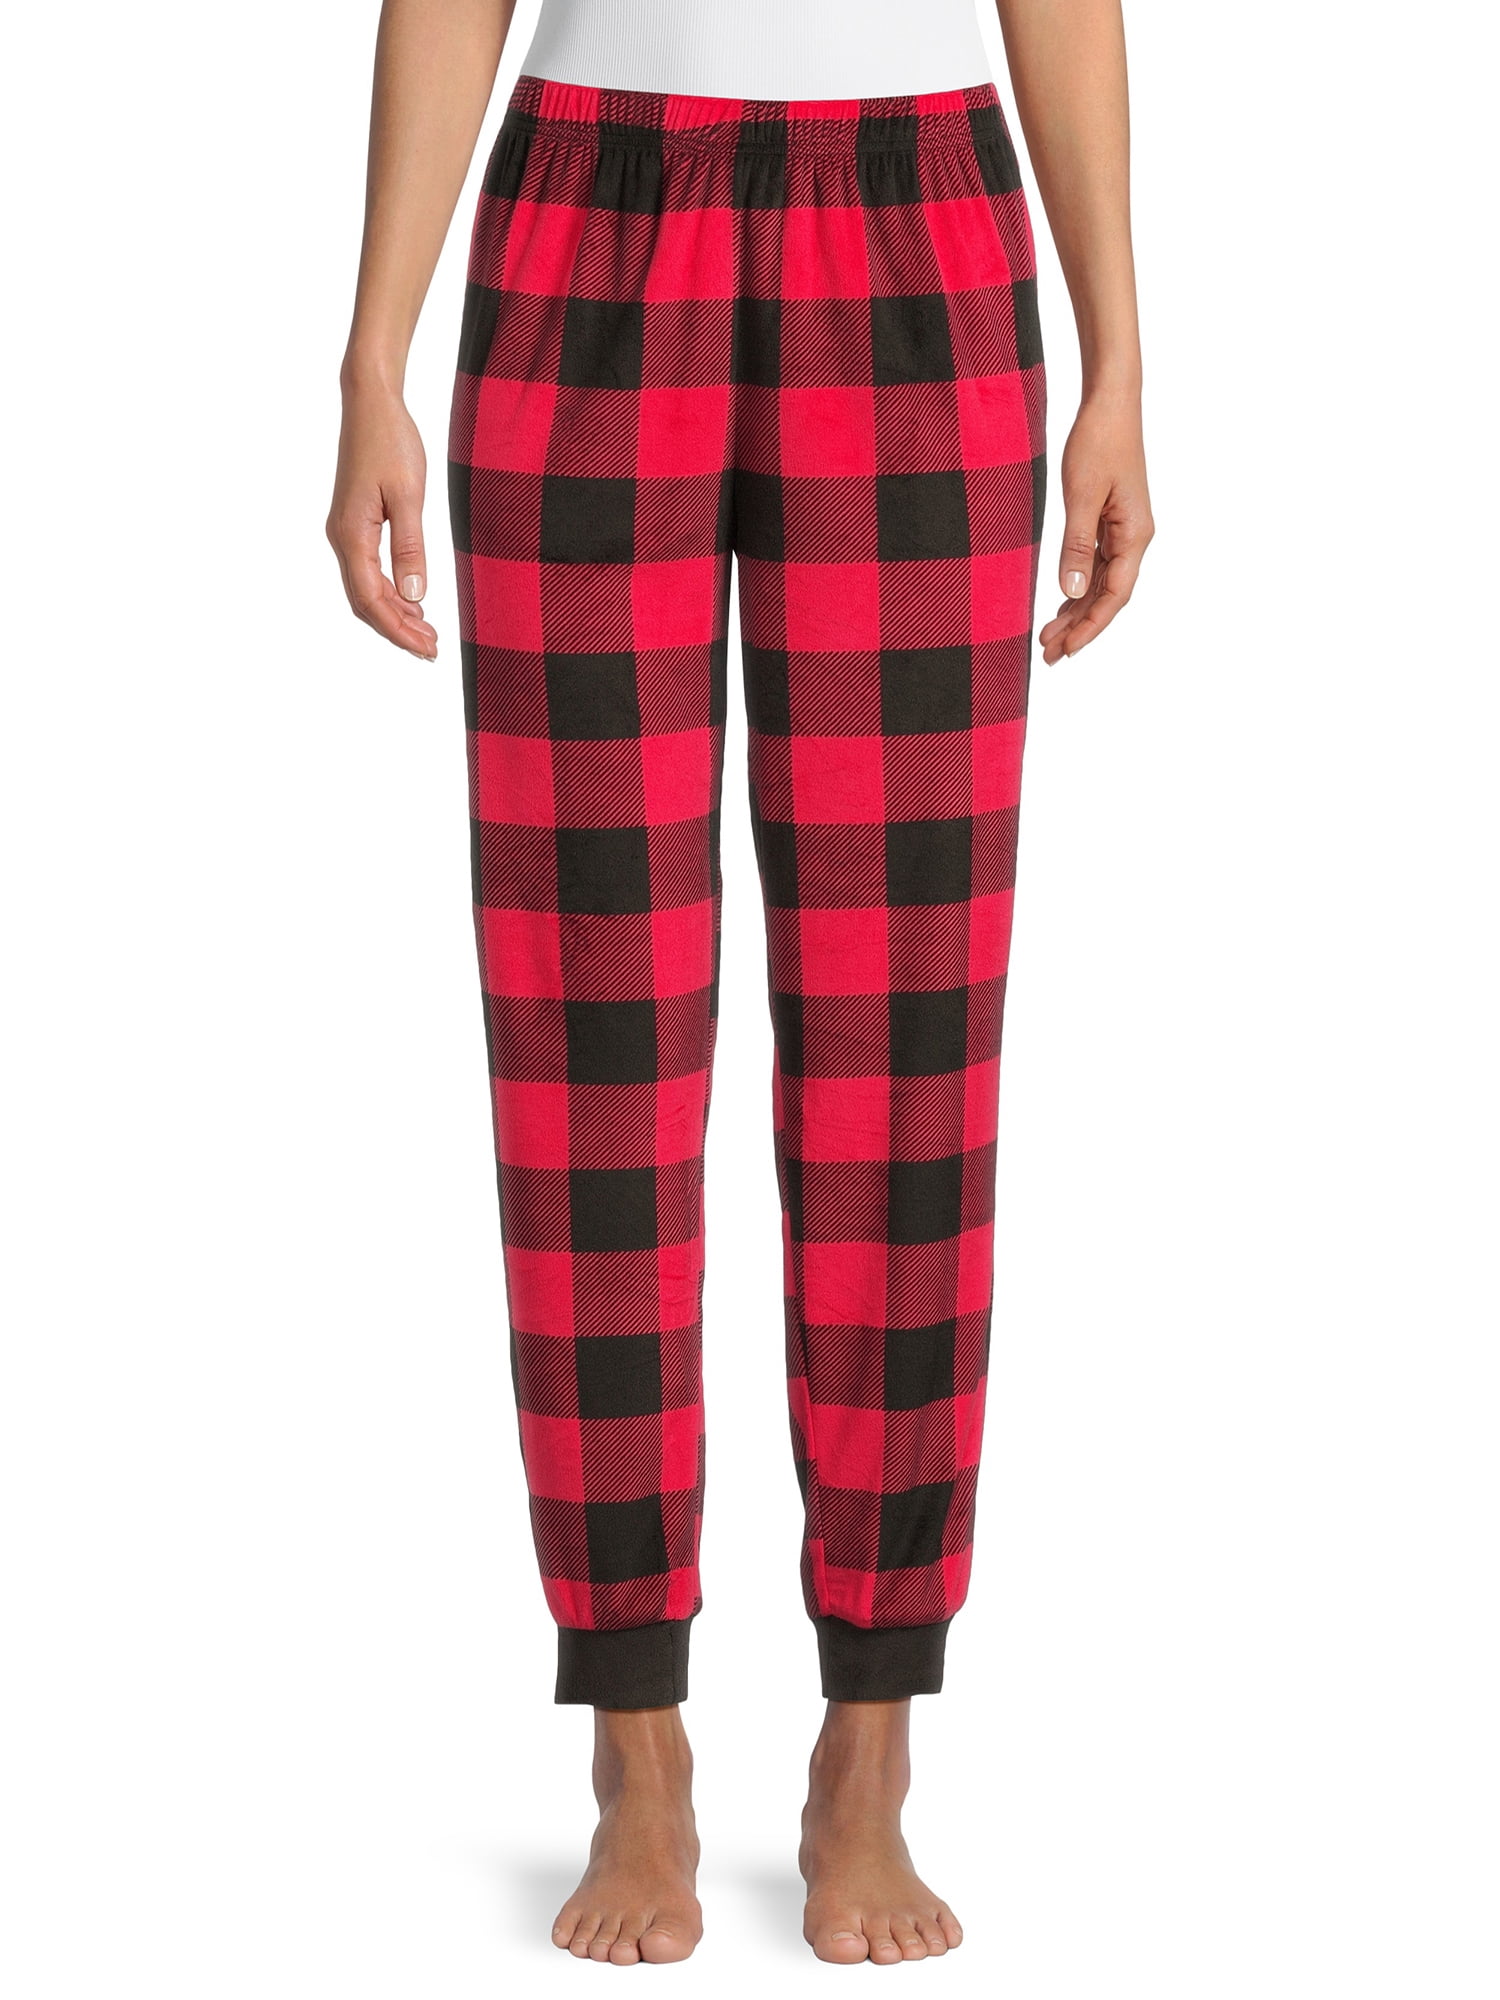 Dearfoams Women's Sleep Pants, Sizes S-3X - Walmart.com